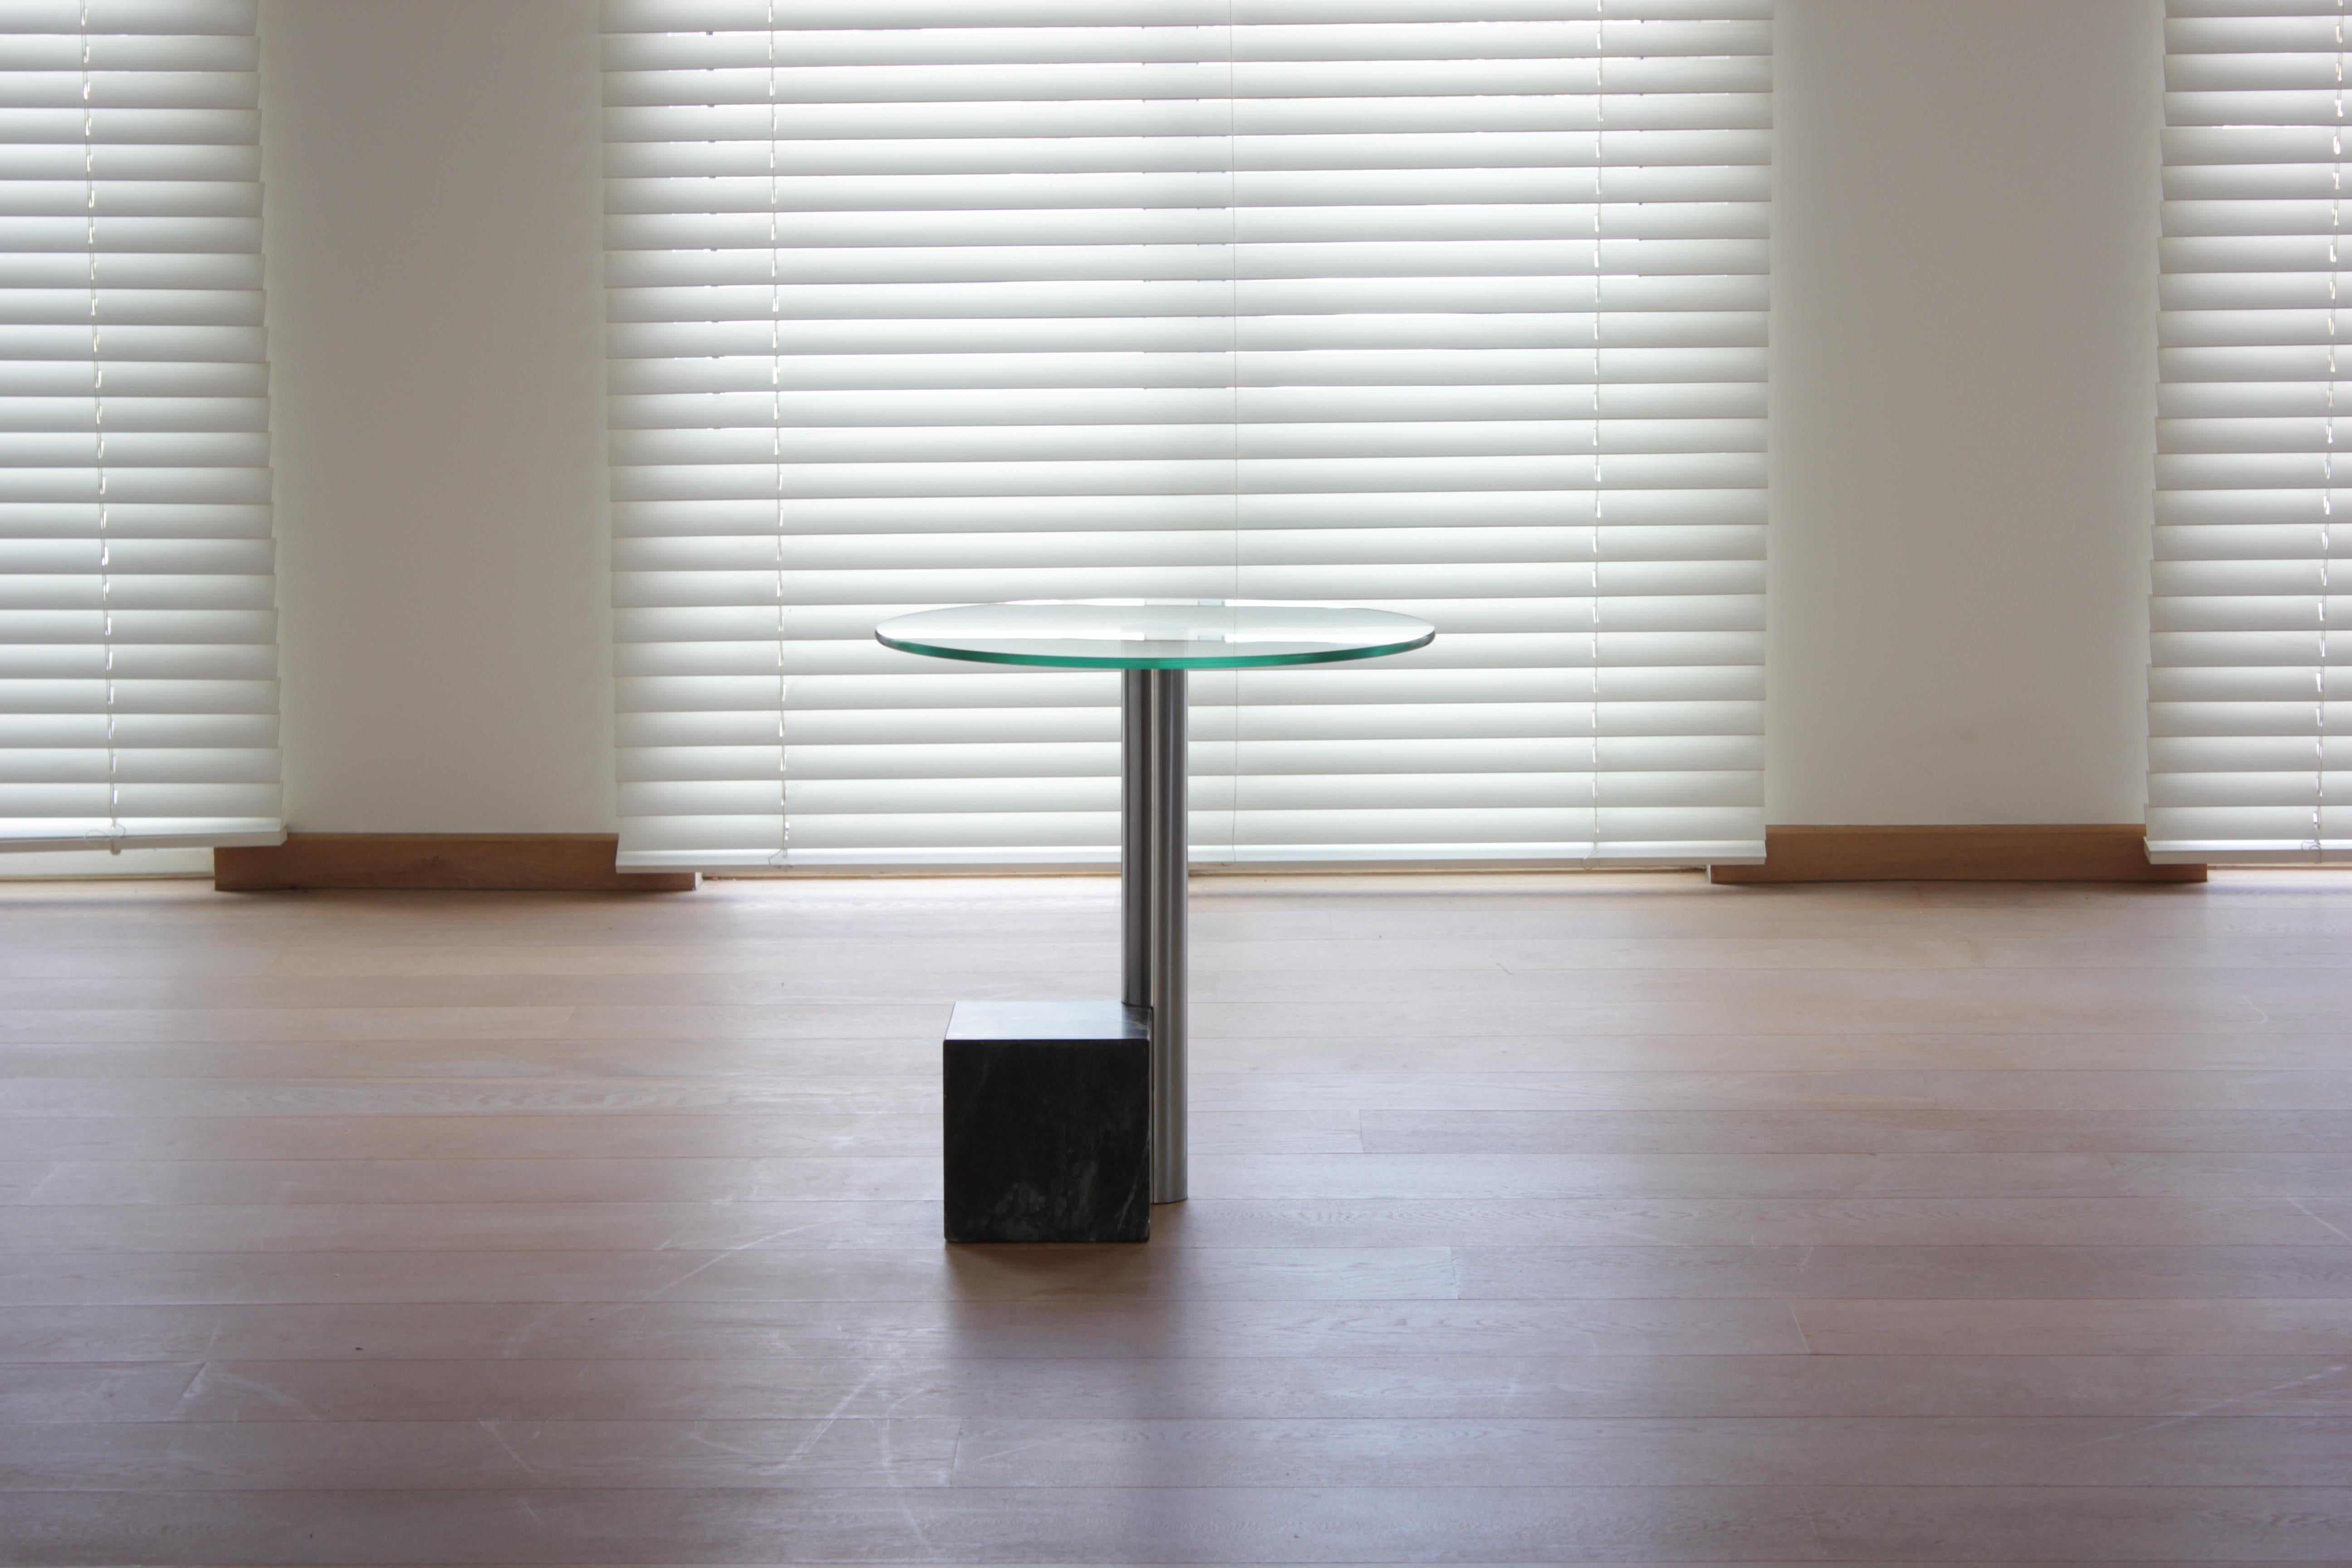  Post-Modern HK2 Side table by Hank Kwint for Metaform For Sale 2